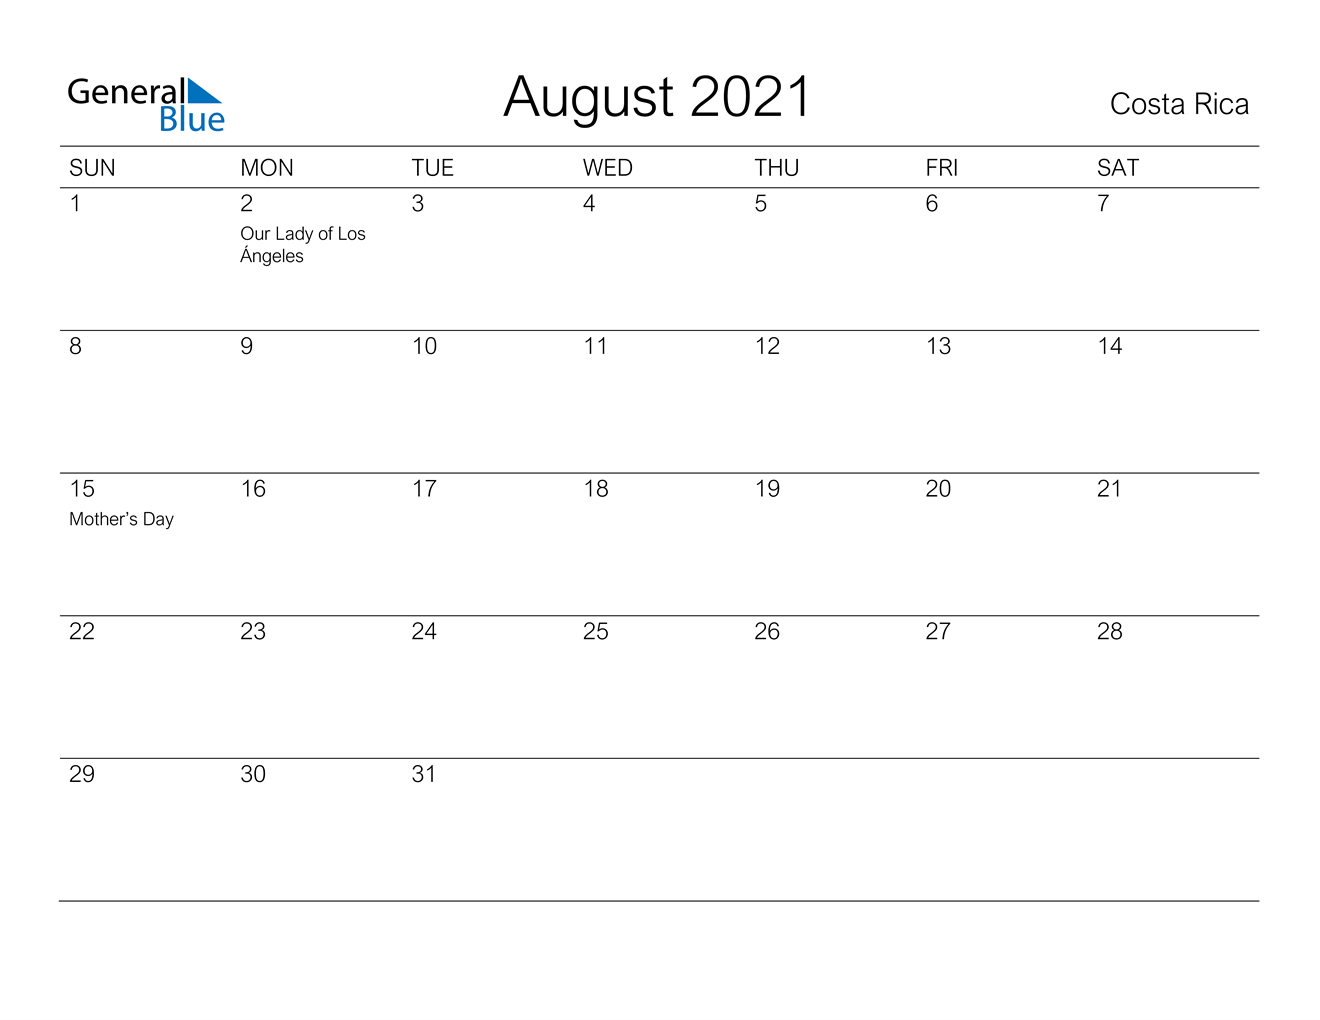 August 2021 Calendar - Costa Rica